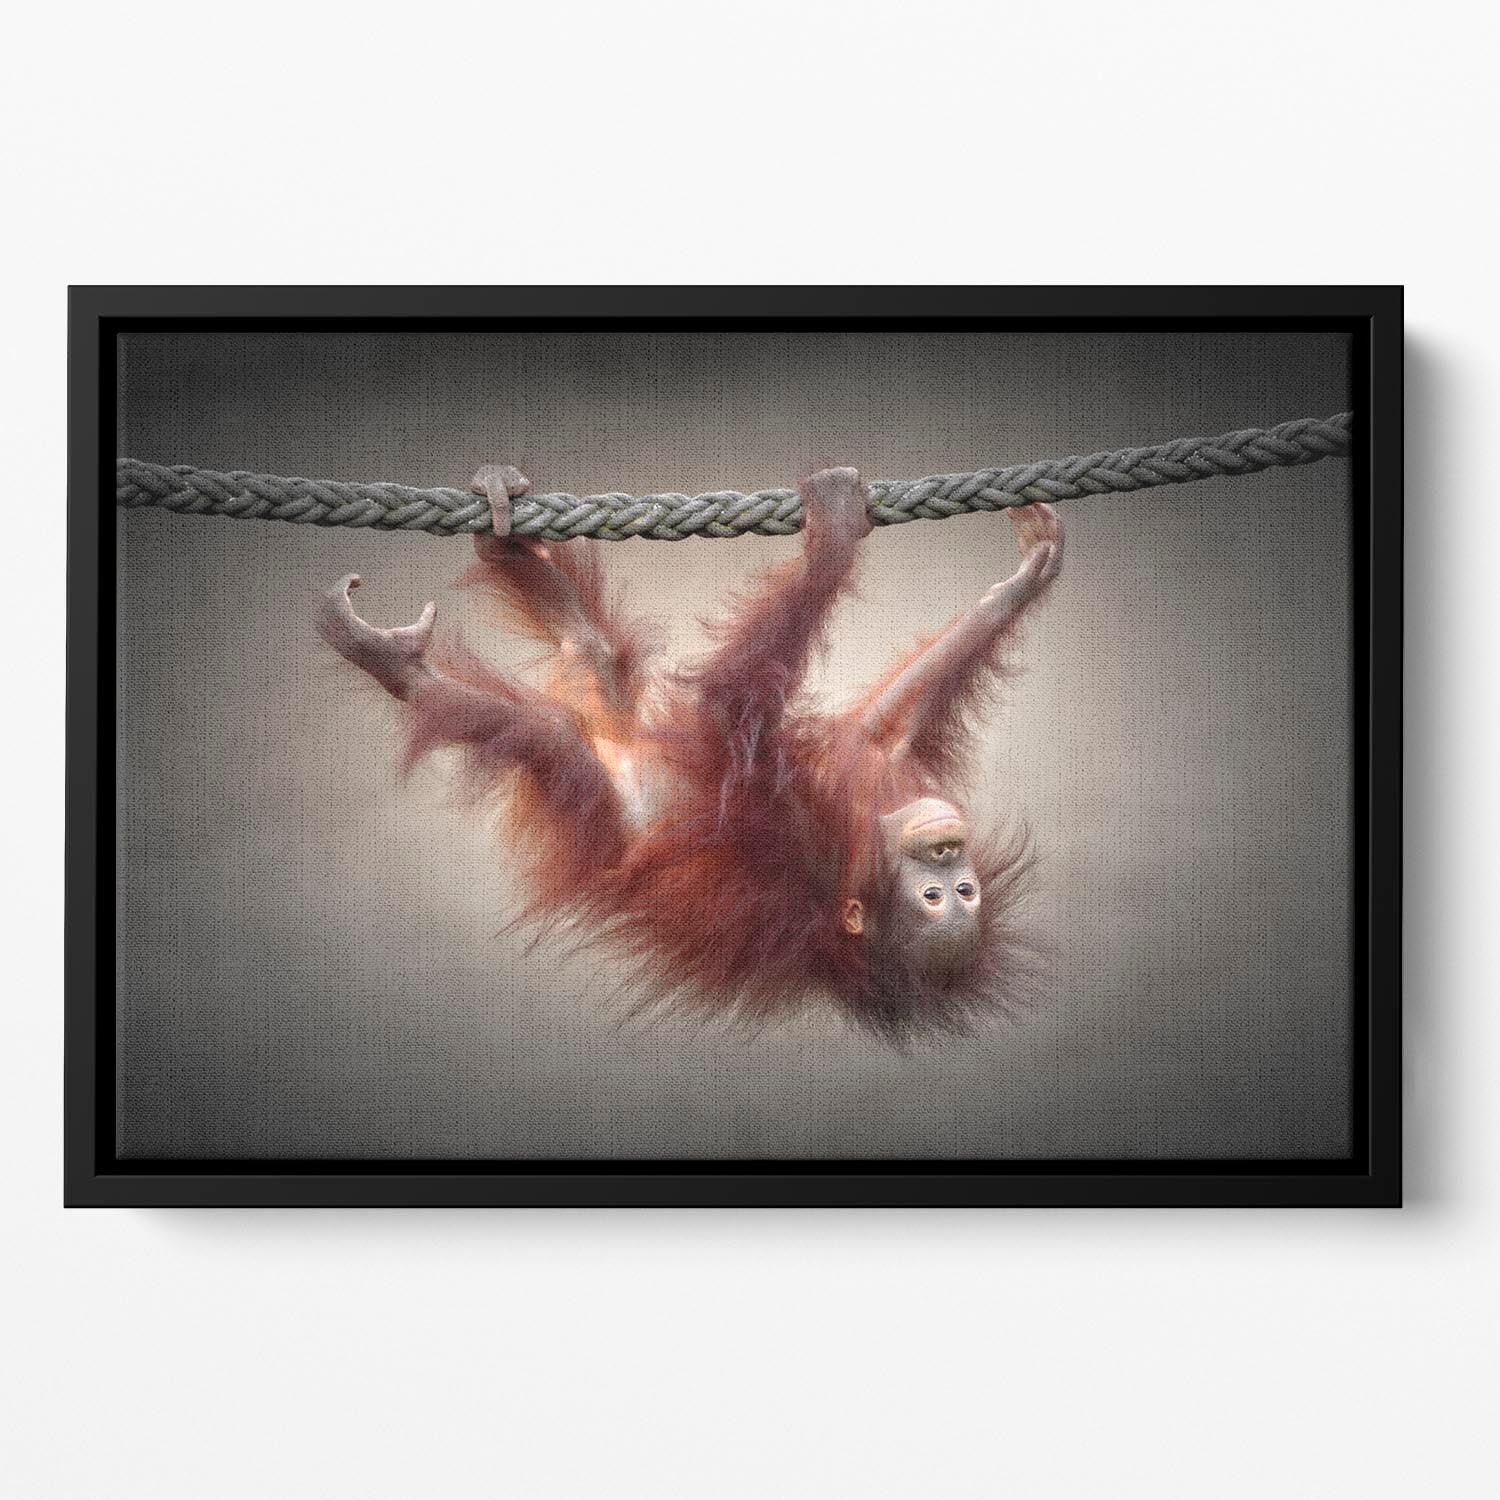 Baby Monkey Floating Framed Canvas - 1x - 2